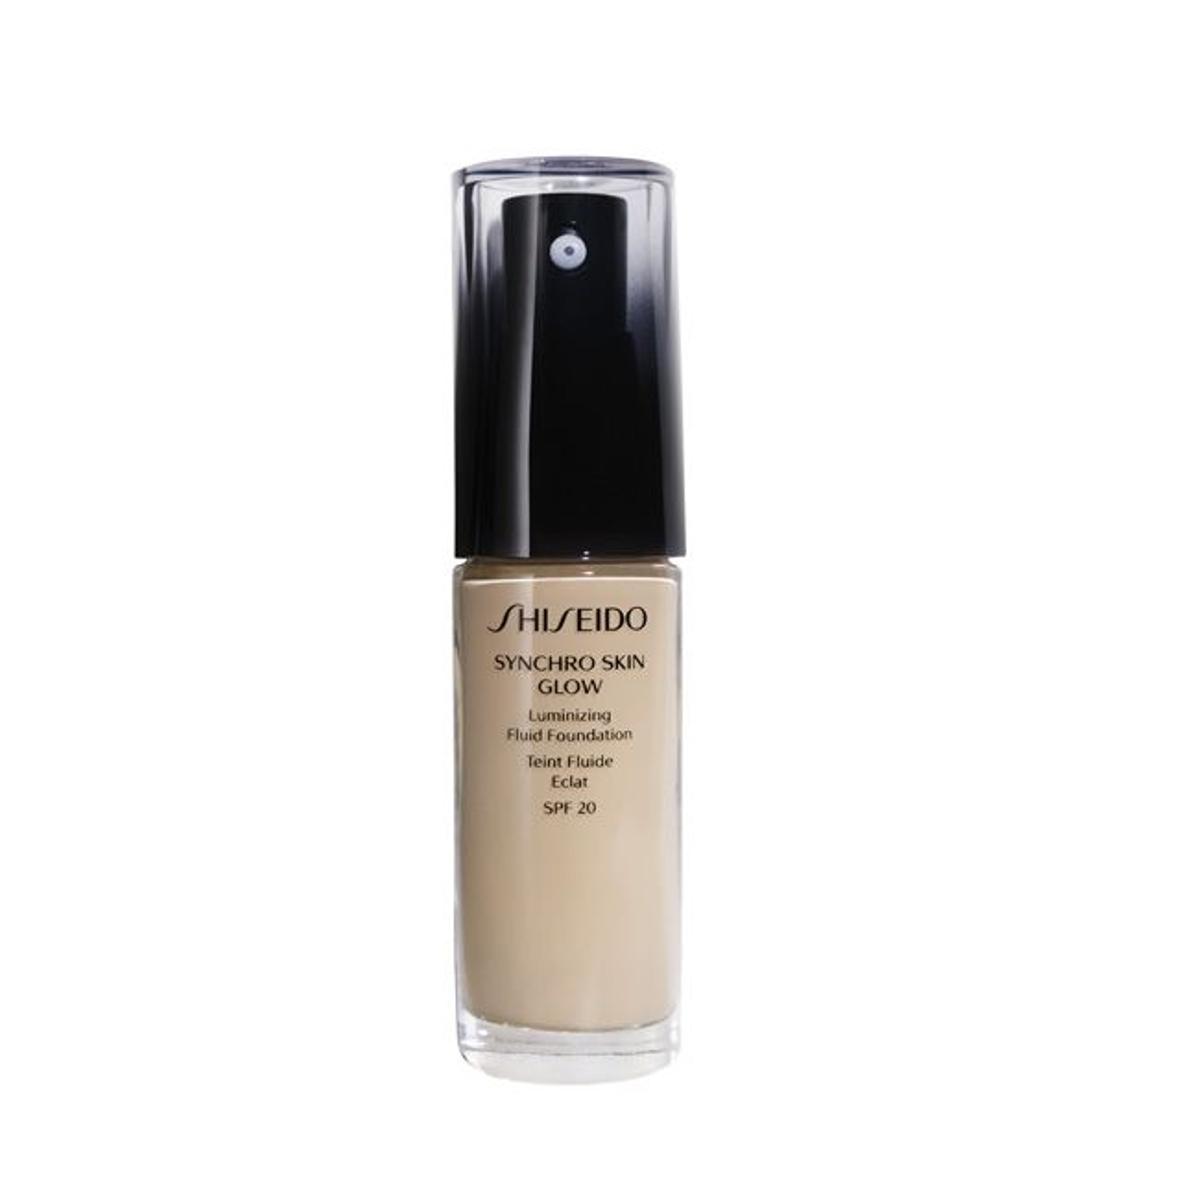 Synchro Skin Glow, de Shiseido